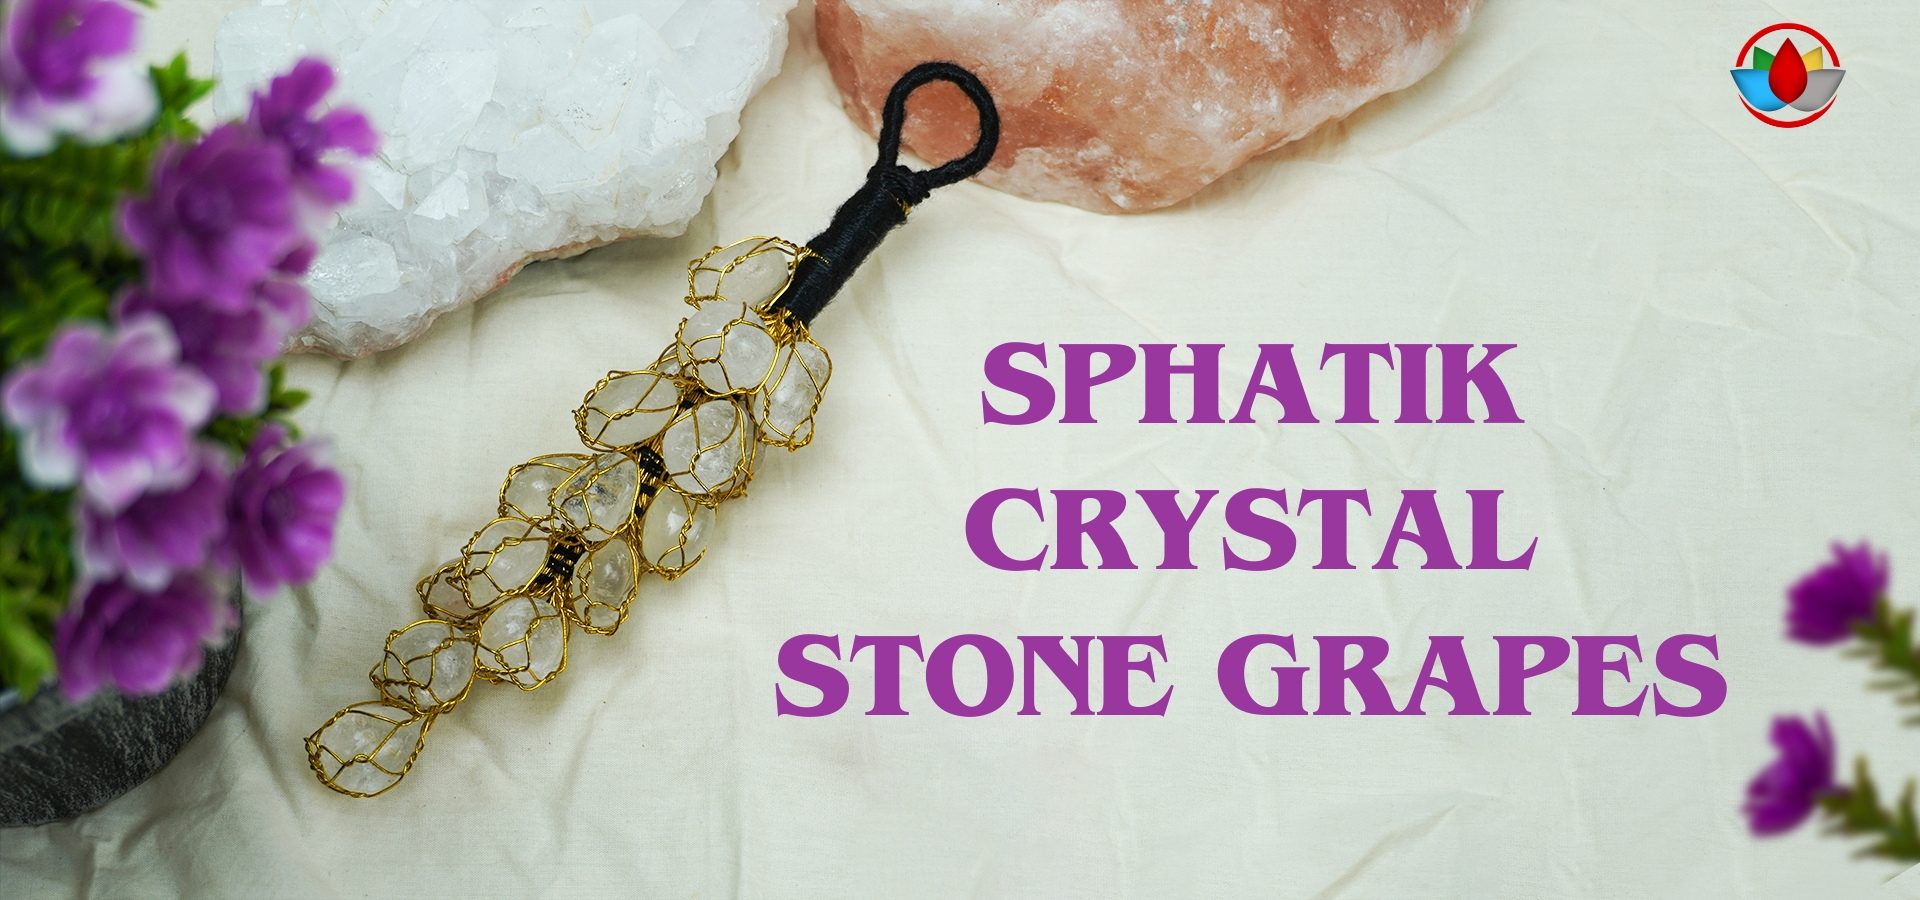 Sphatik Crystal Stone Grapes